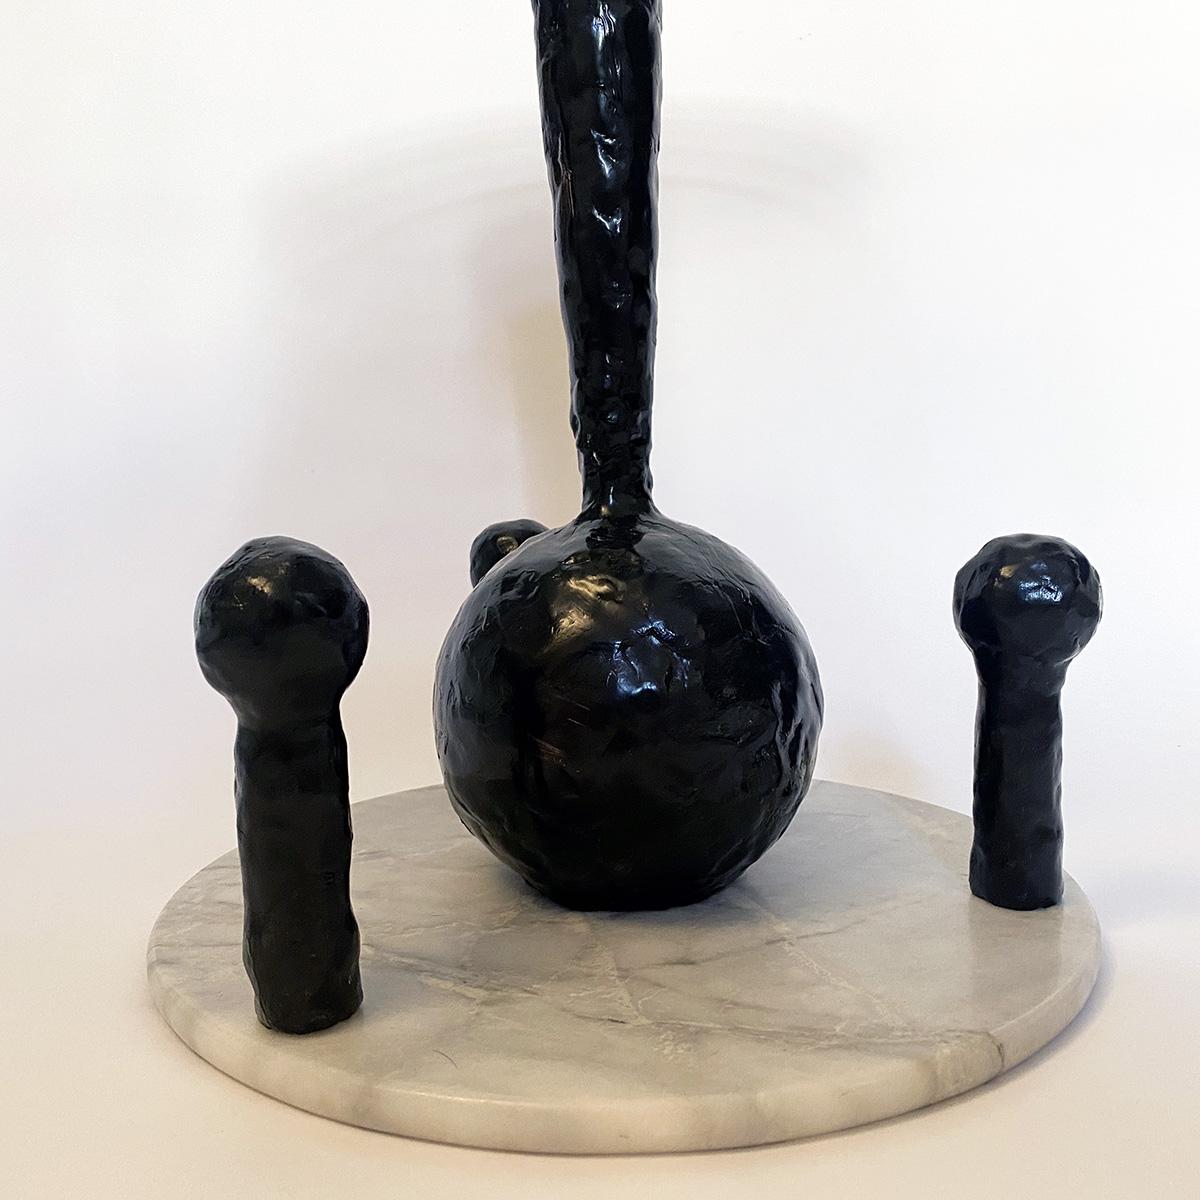 Table d'appoint sculpturale postmoderne de Jonathan Christian.
  